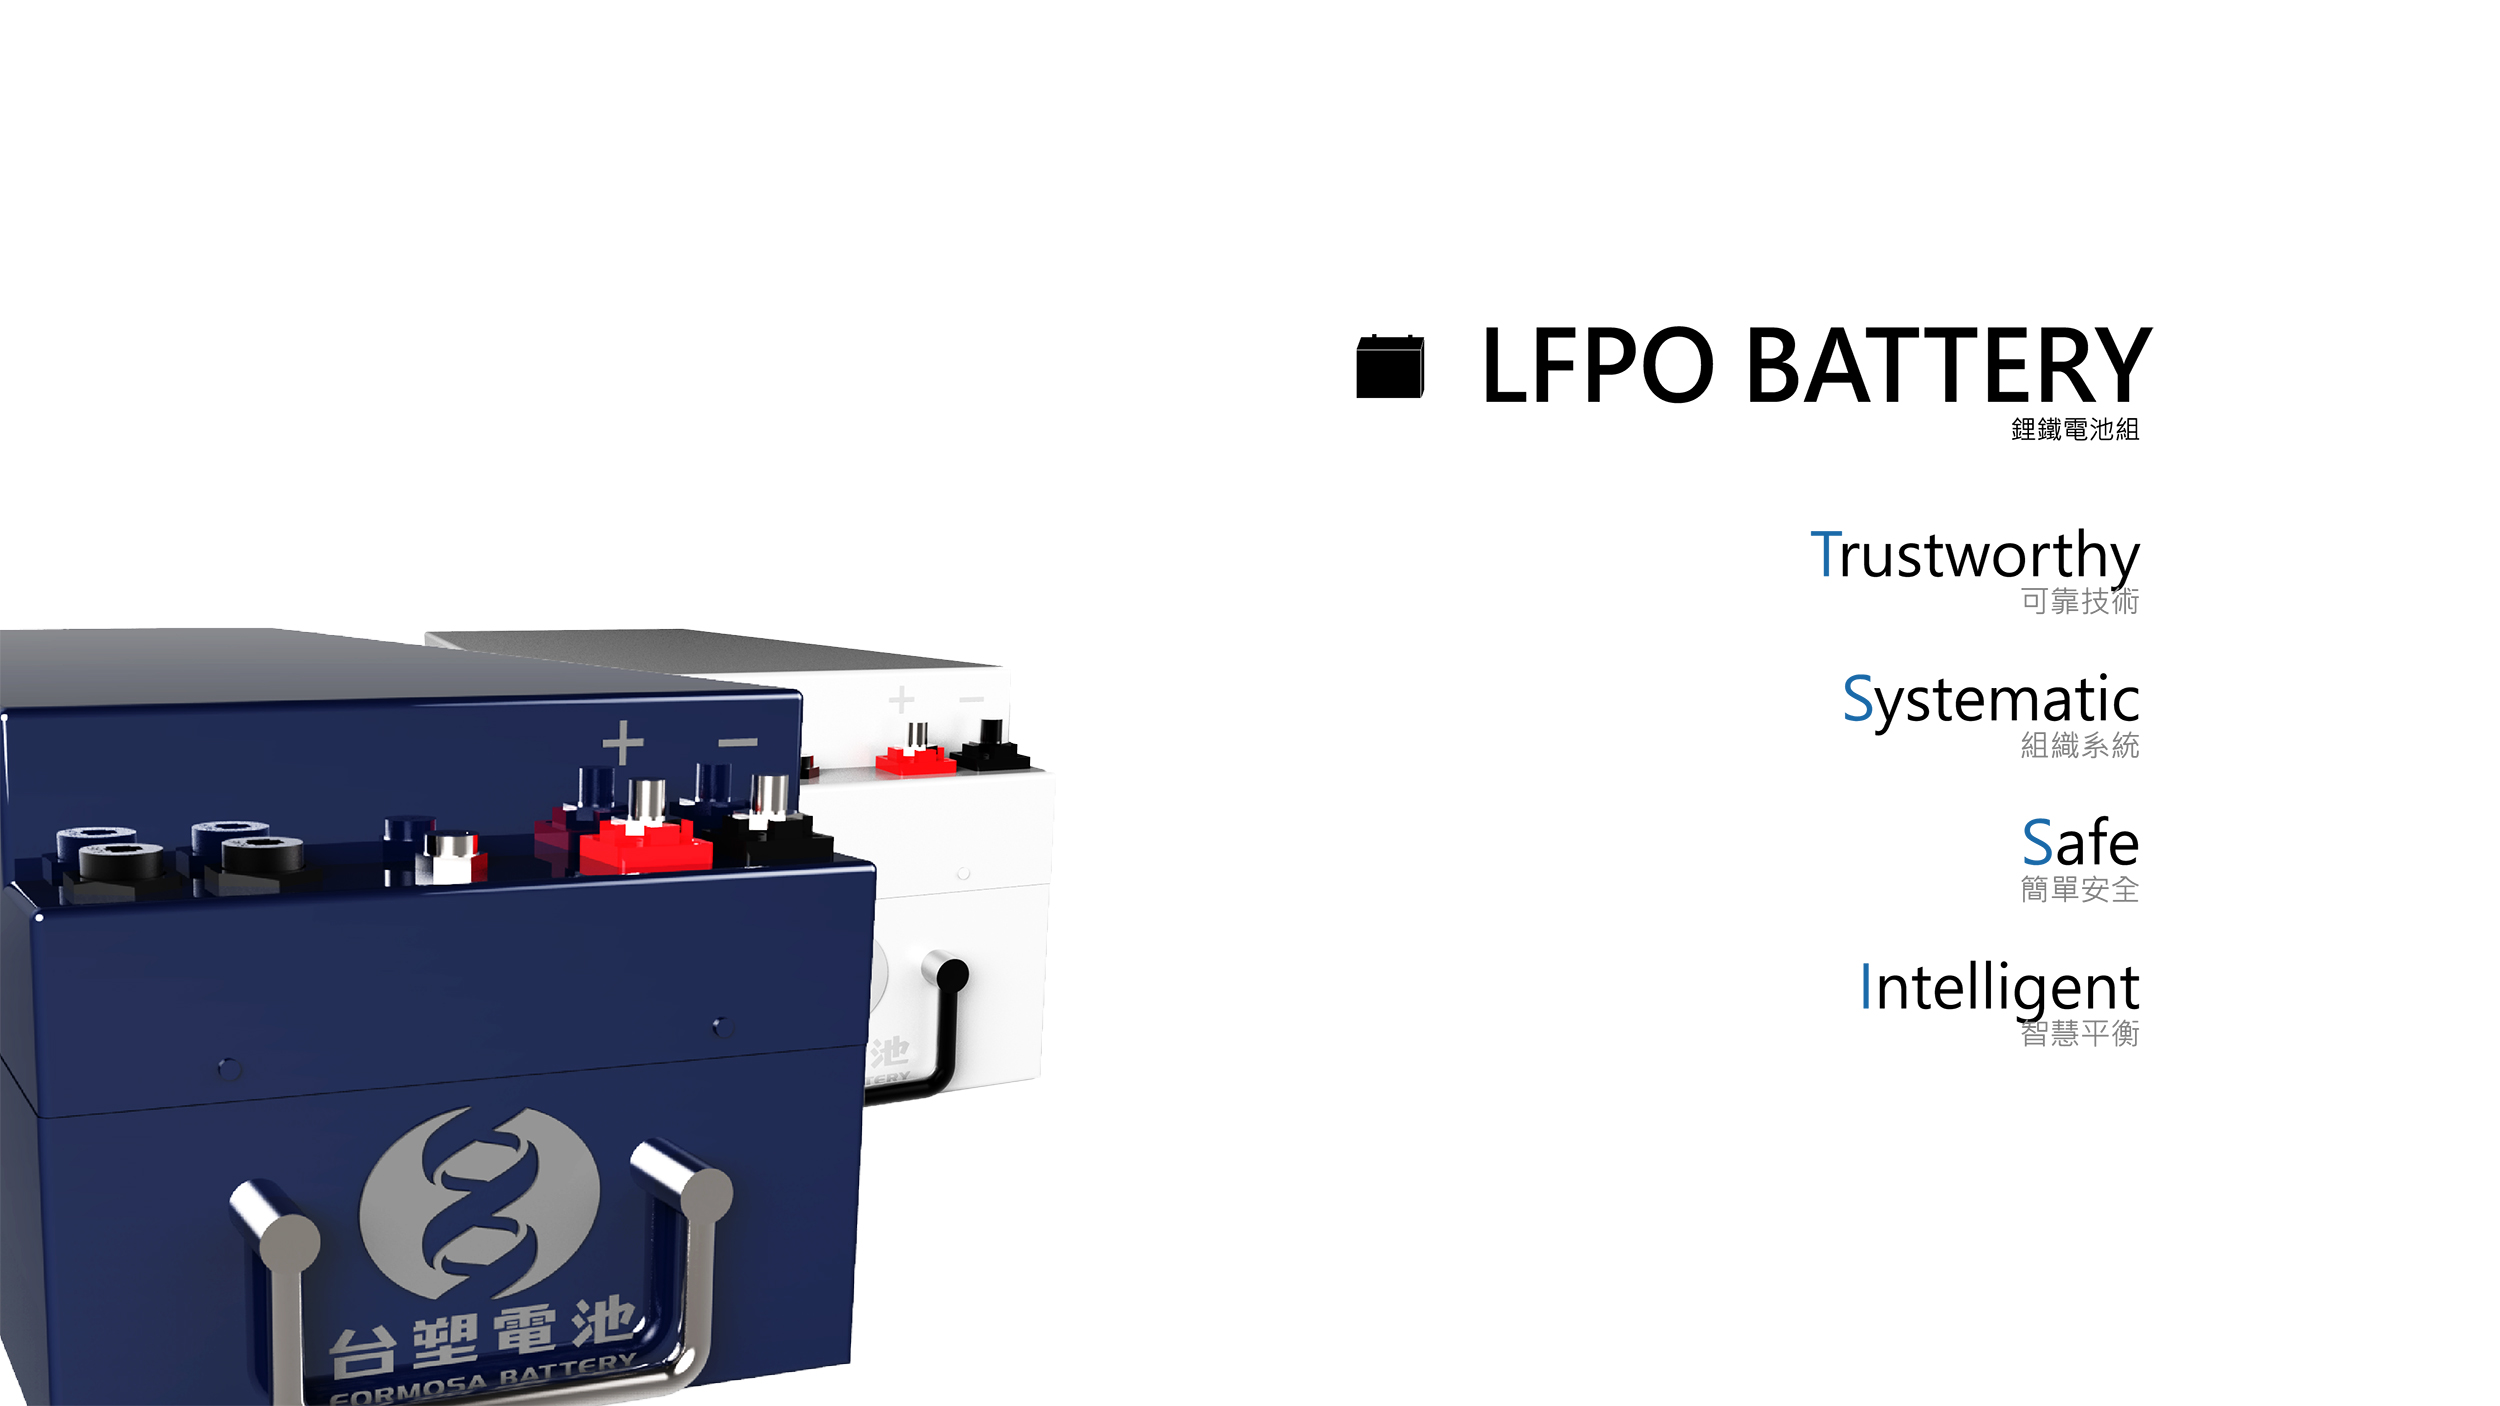 LFPO BATTERY鋰鐵電池組  Trustworthy可靠技術    Systematic組織系統   Safe簡單安全   Intelligent智慧平衡